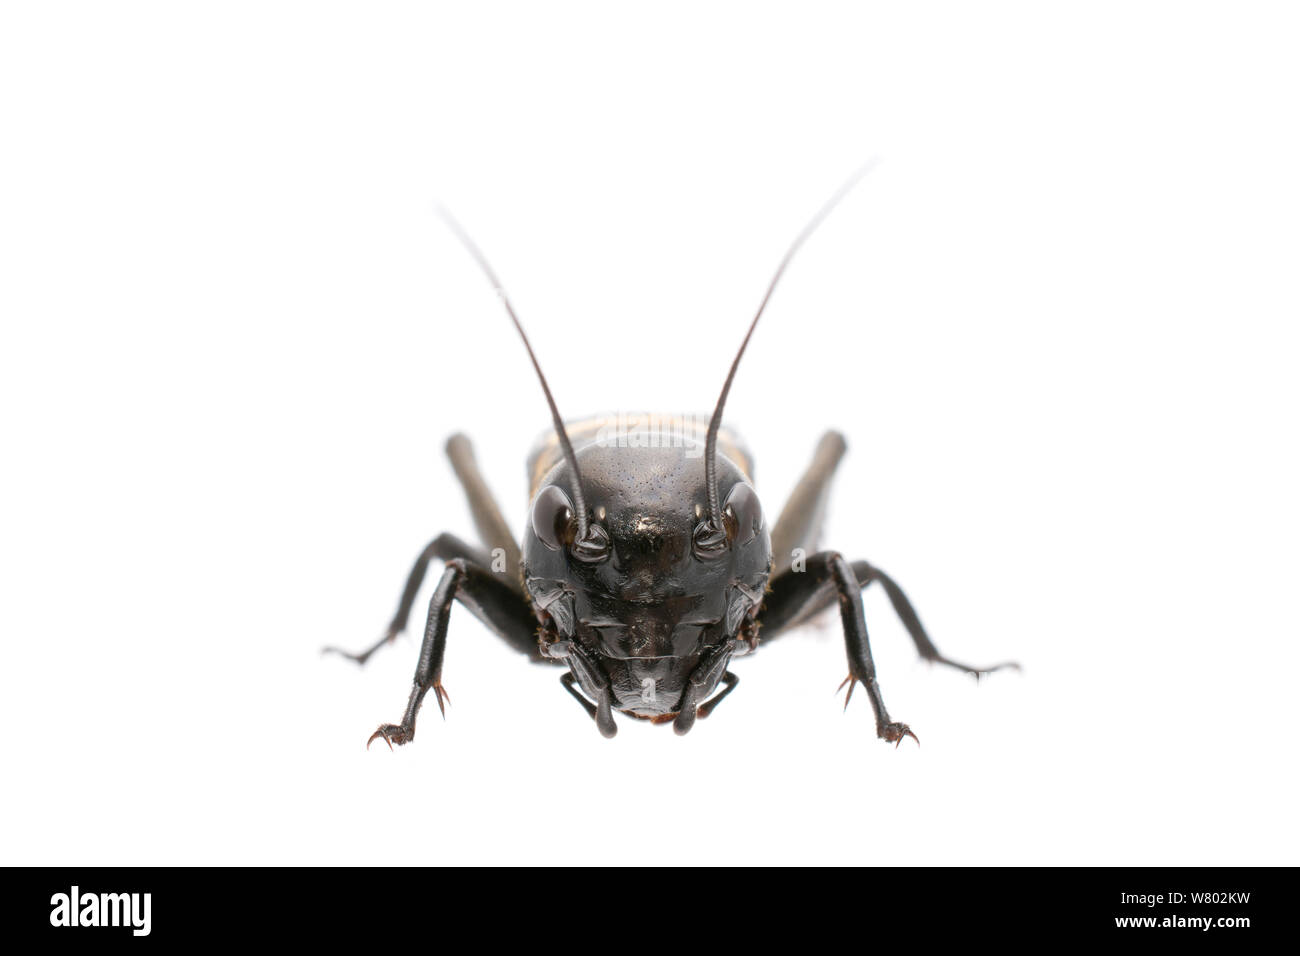 Field cricket (Gryllus campestris) male, La Brenne, France. May. Meetyourneighbours.net project Stock Photo